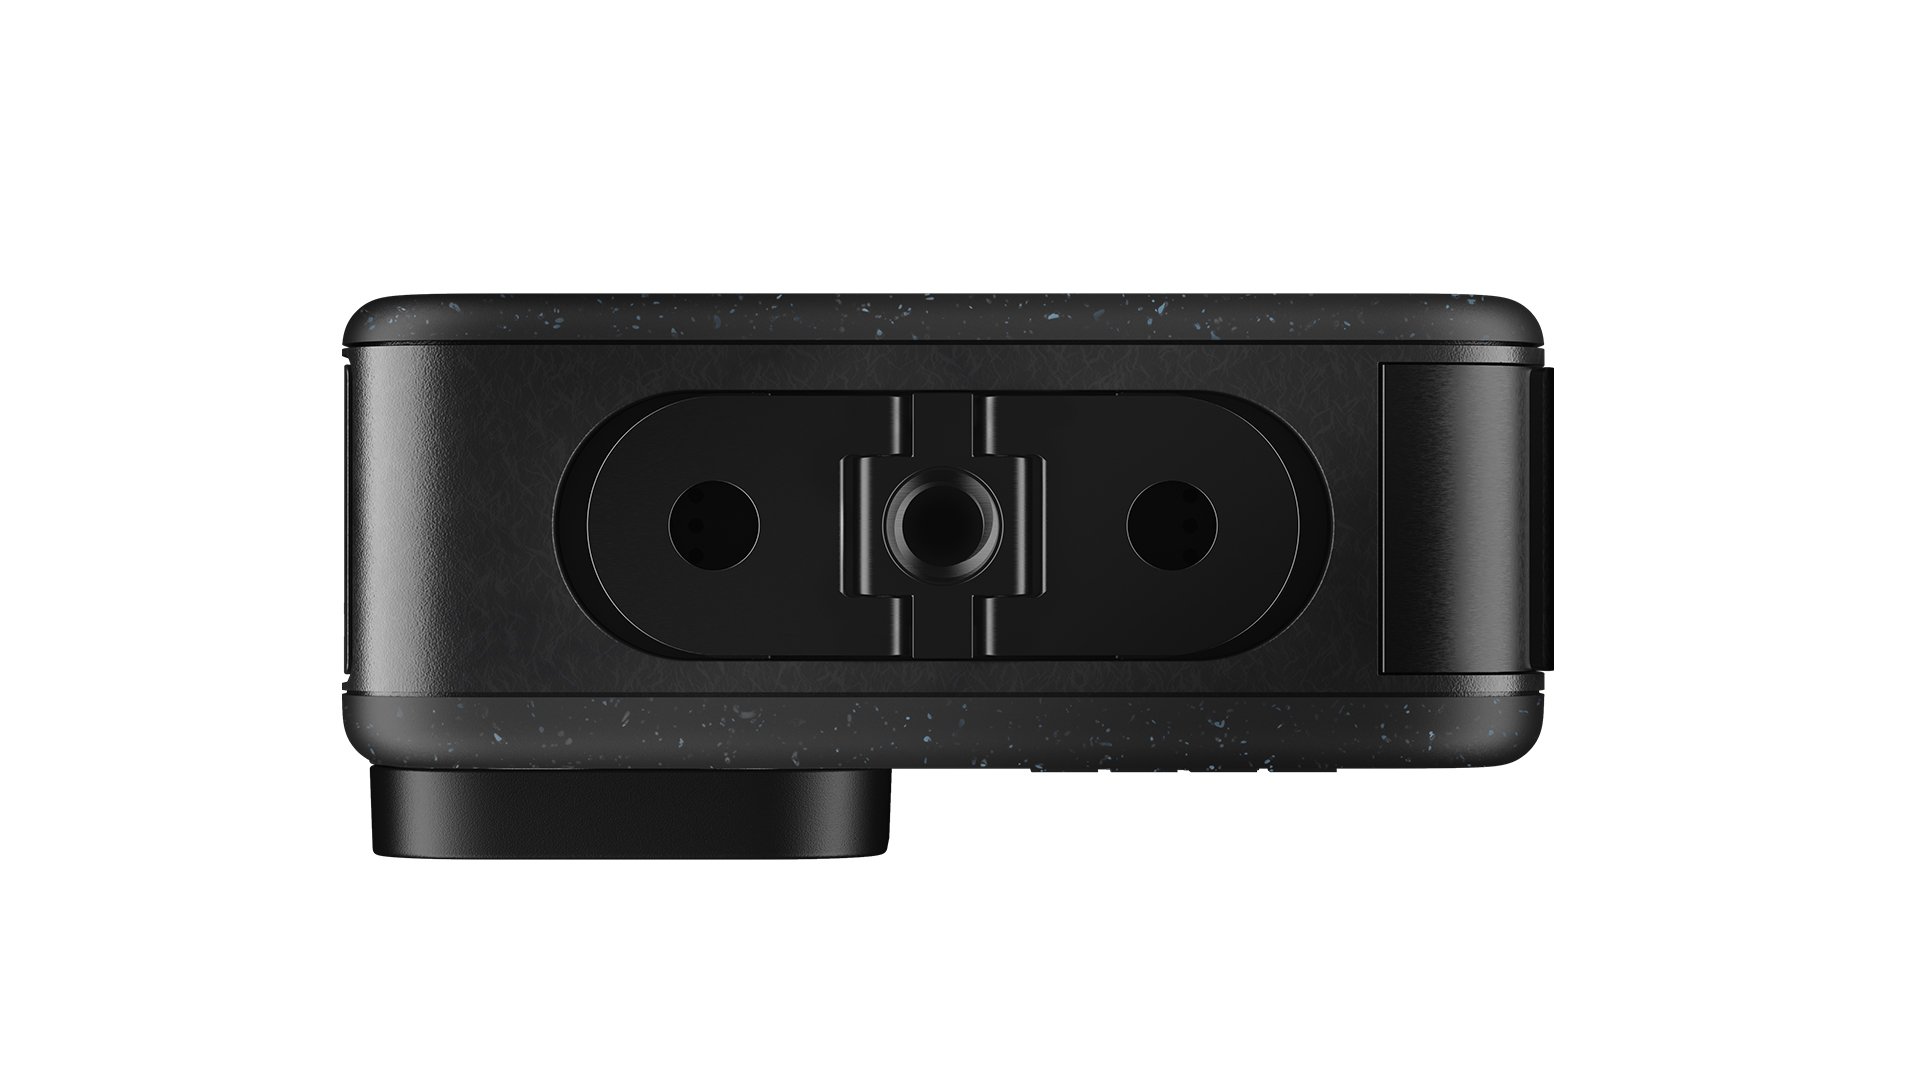 Underside GoPro Hero 12 Black with standard tripod mount on a white background